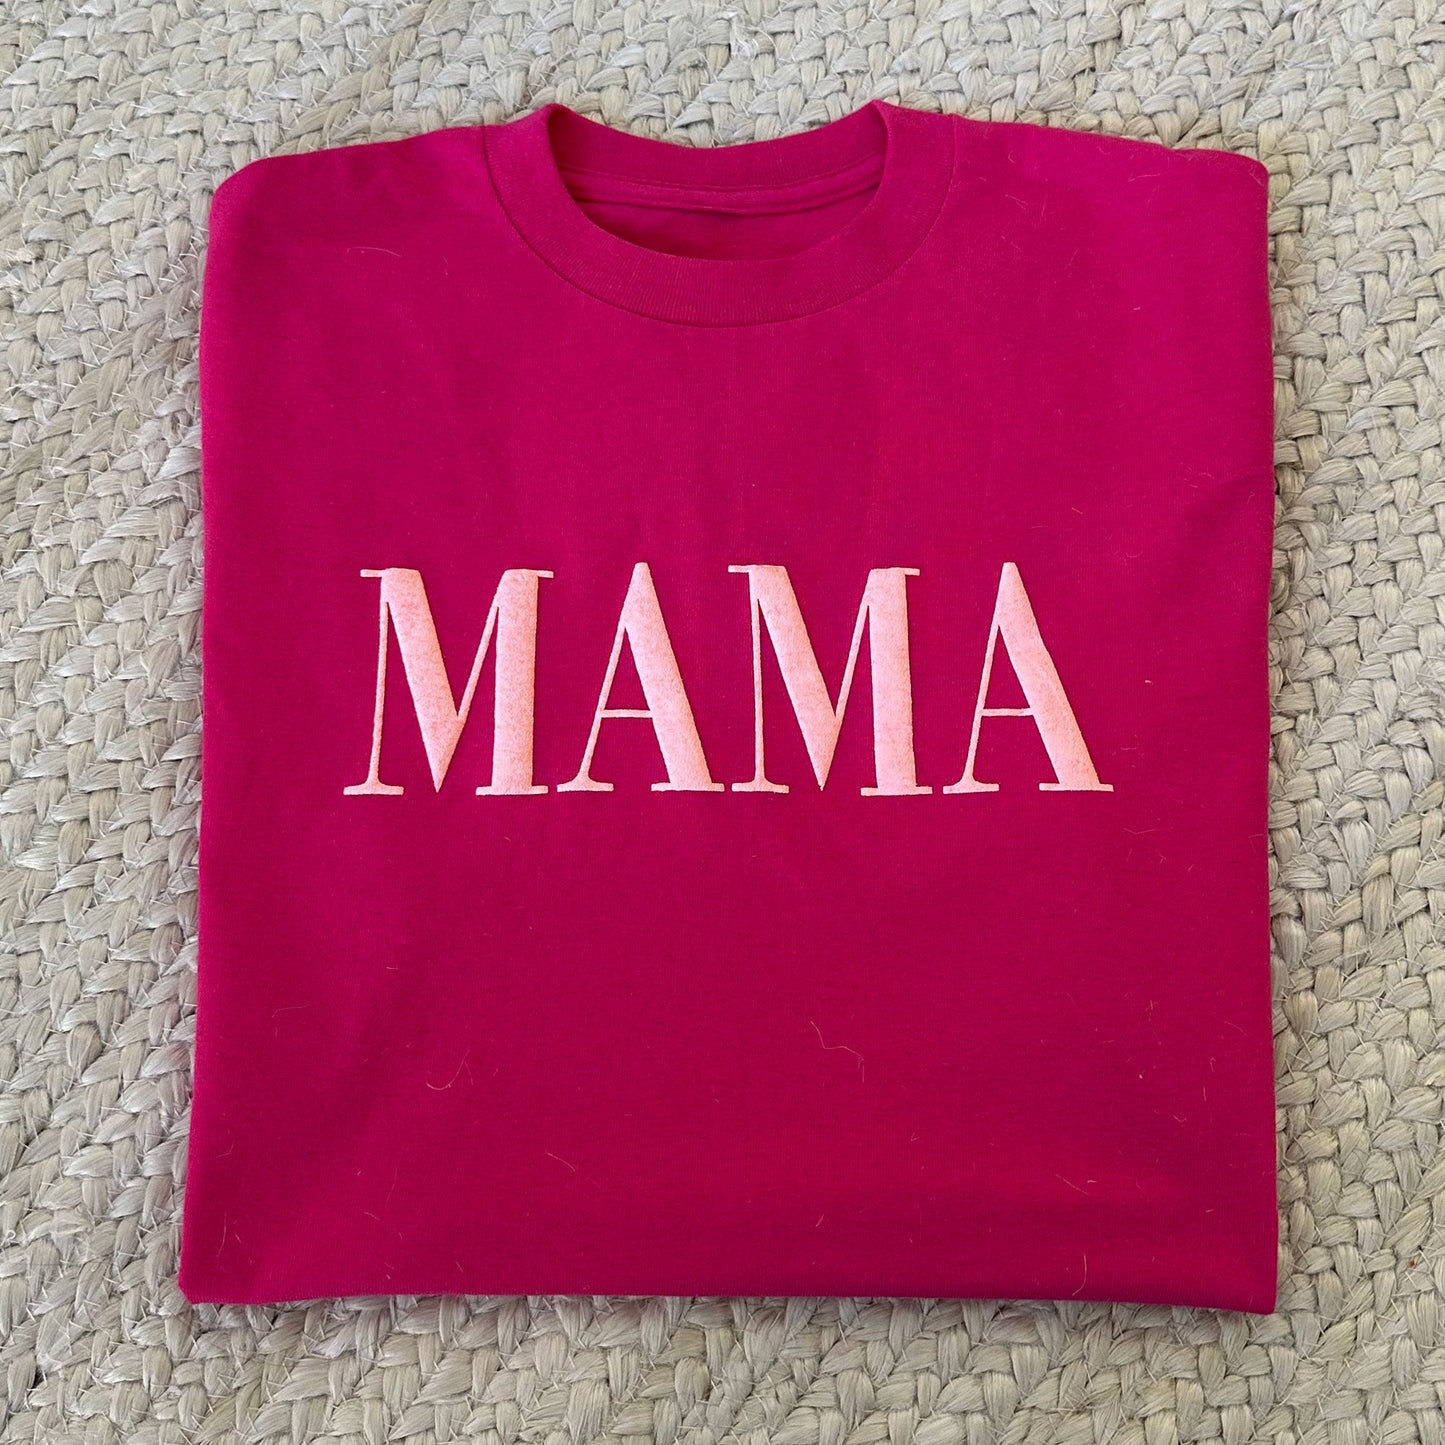 Mama Tee with Puff Print Design